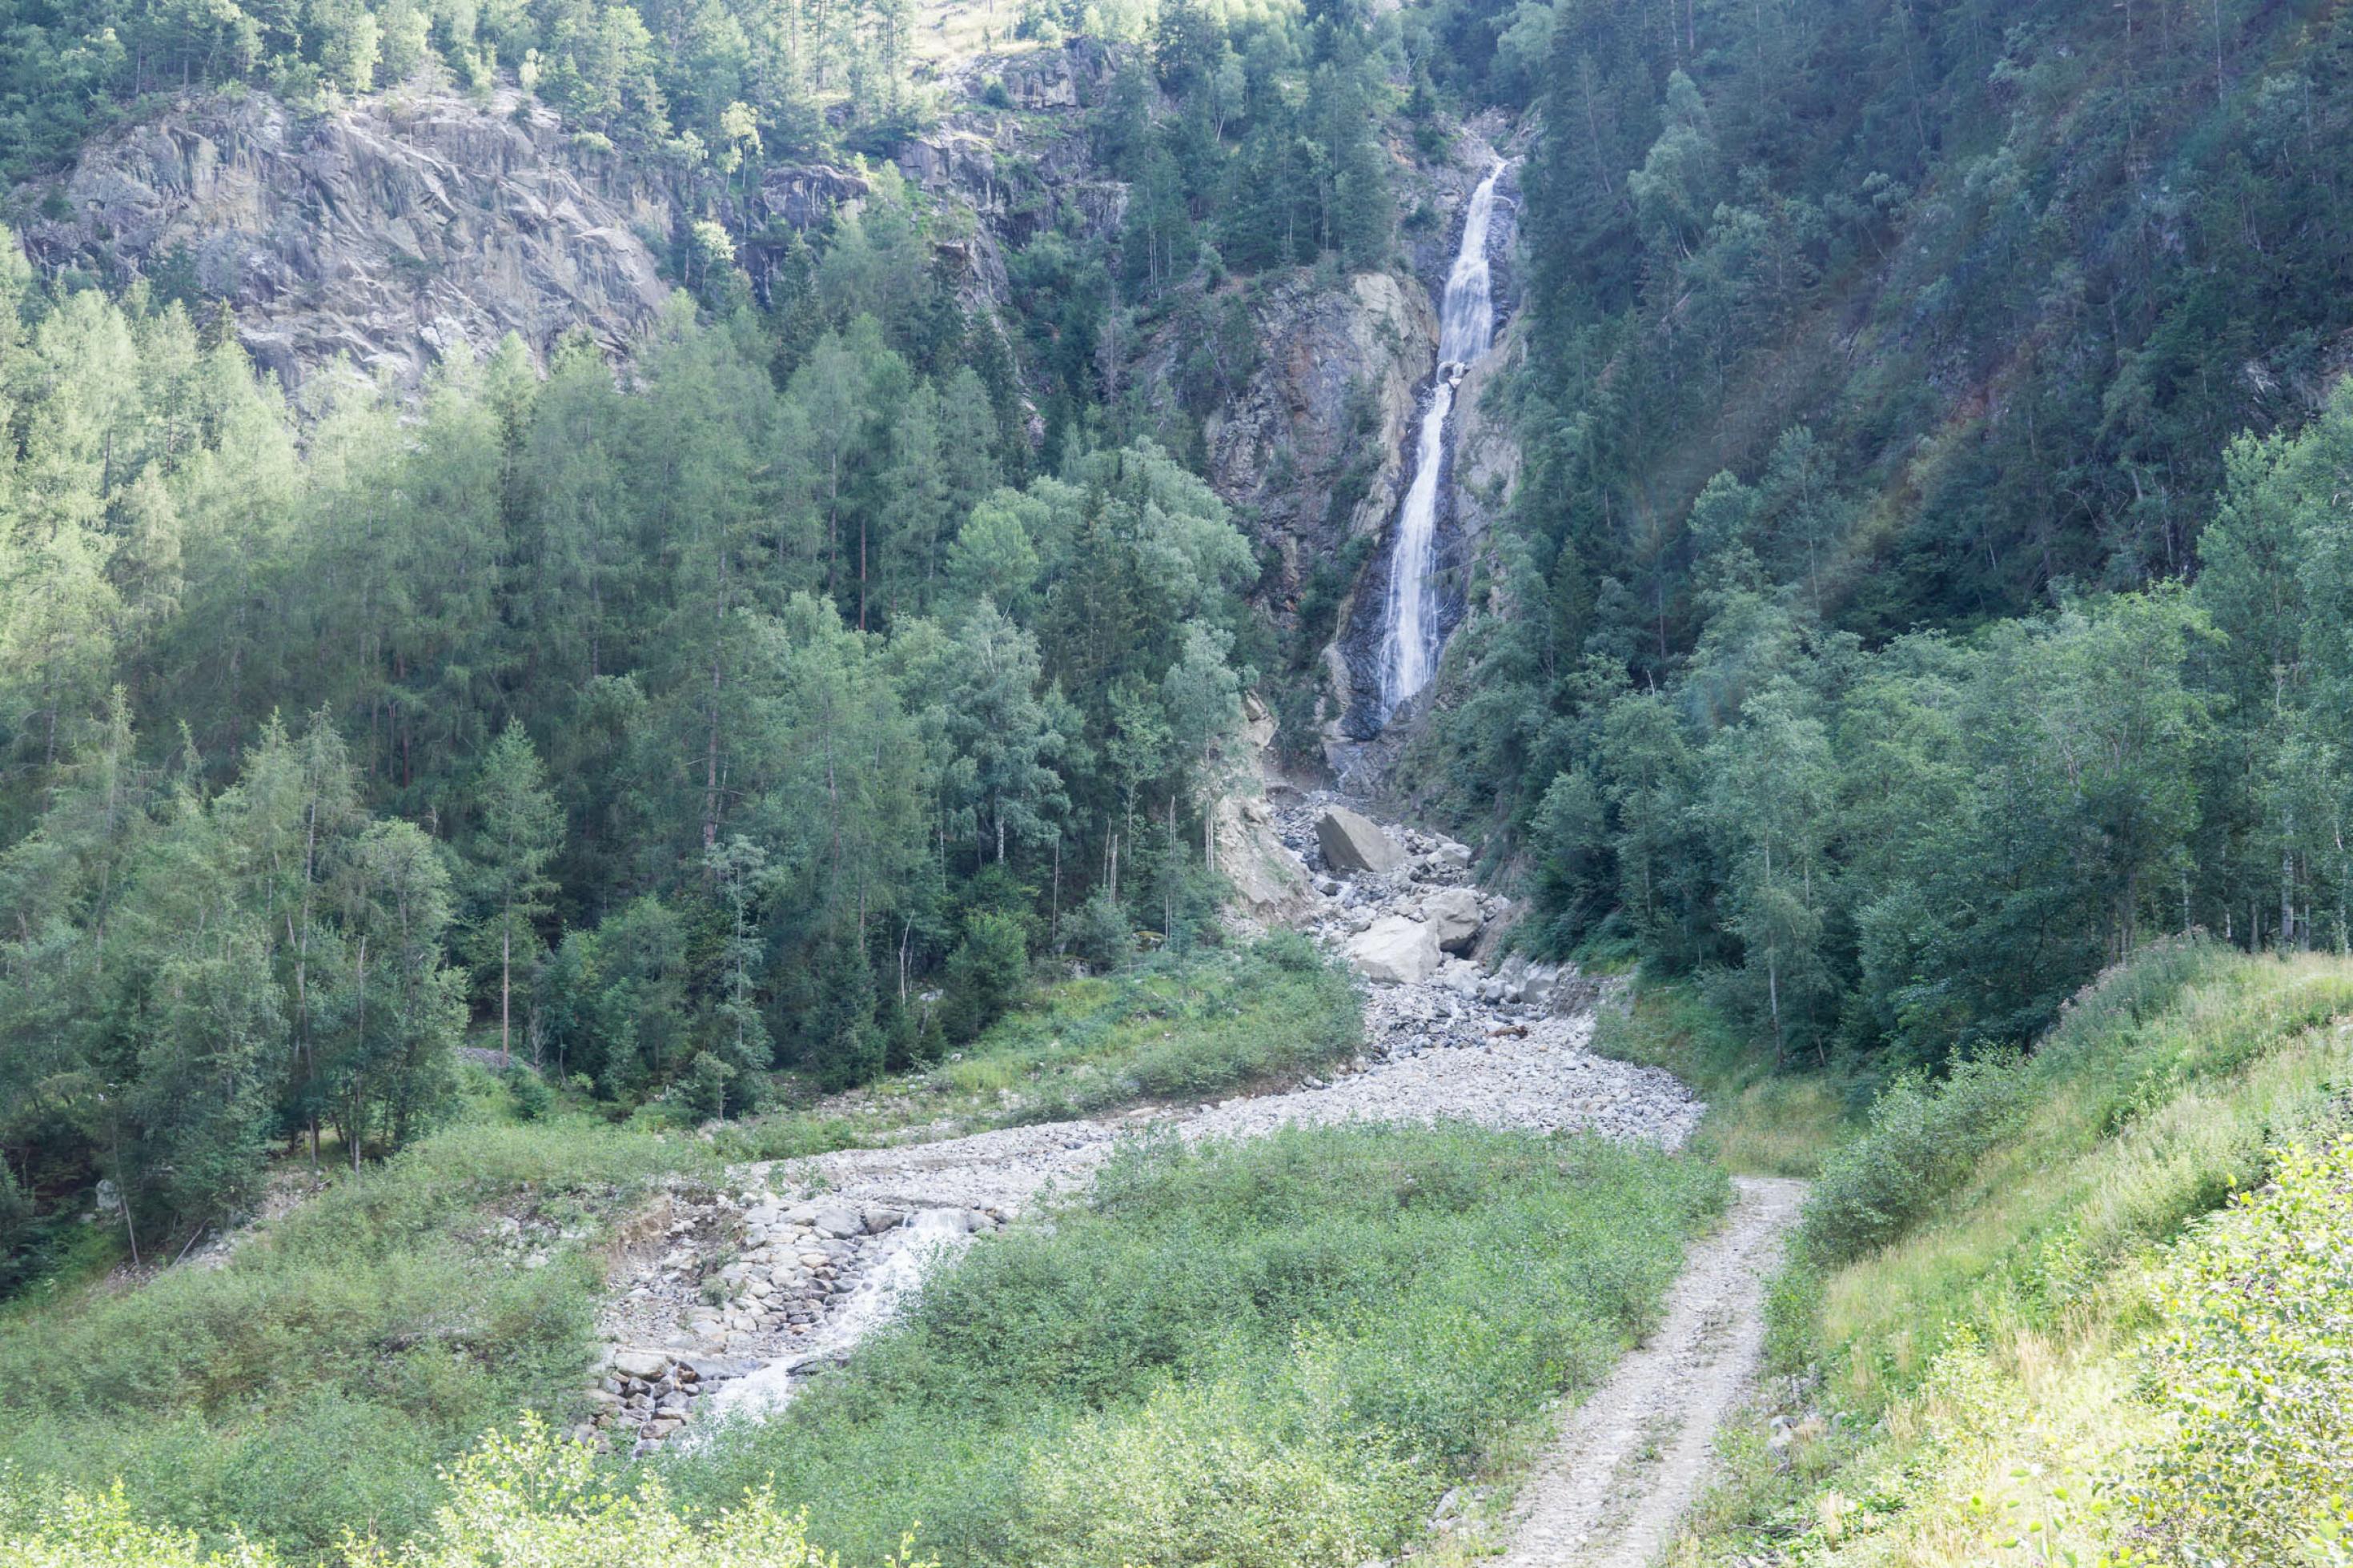 Felswand mit schmalem Wasserfall in Gebirgslandschaft